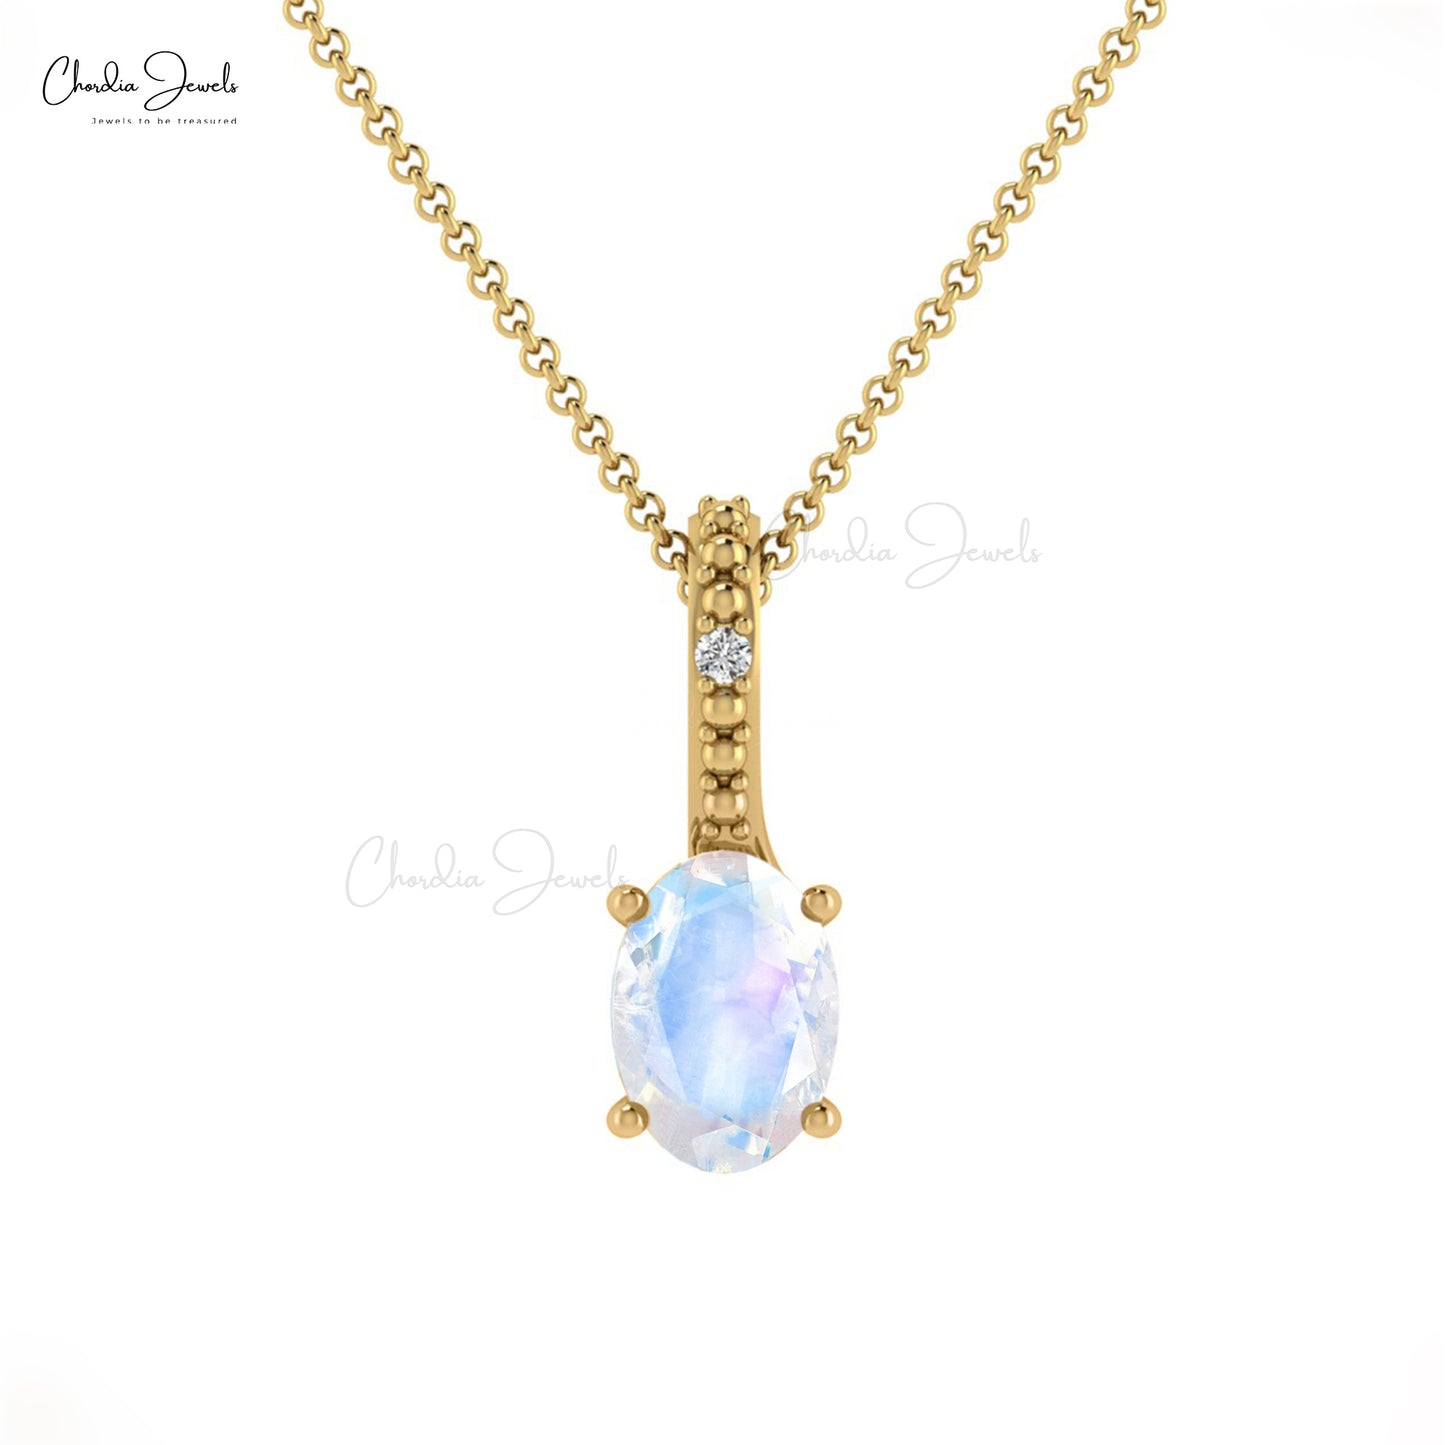 Fashionable Minimalist Authentic Rainbow Moonstone Gemstone Hidden Bail Pendant Necklace 14k Pure Gold Diamond Pendant Anniversary Gift For Wife